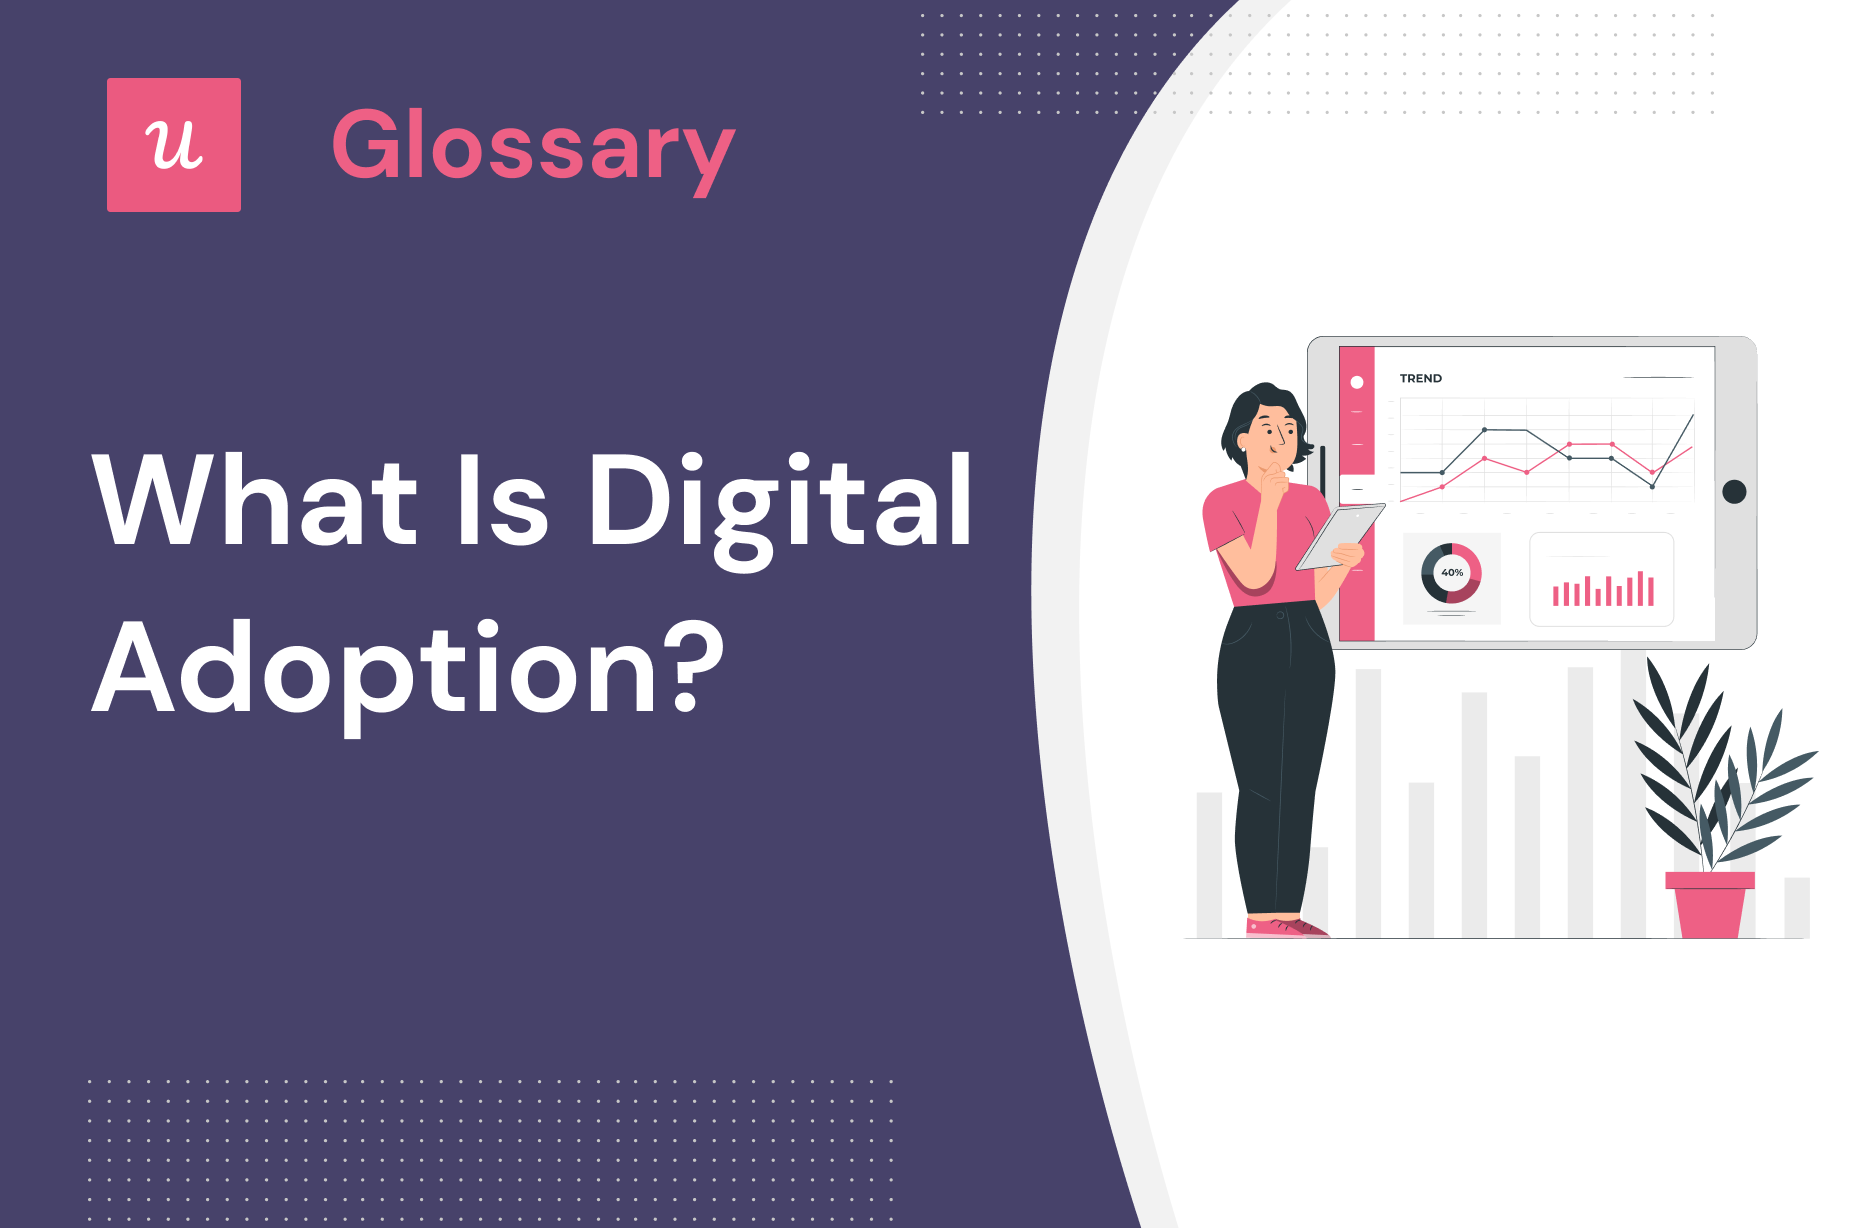 What is Digital Adoption?